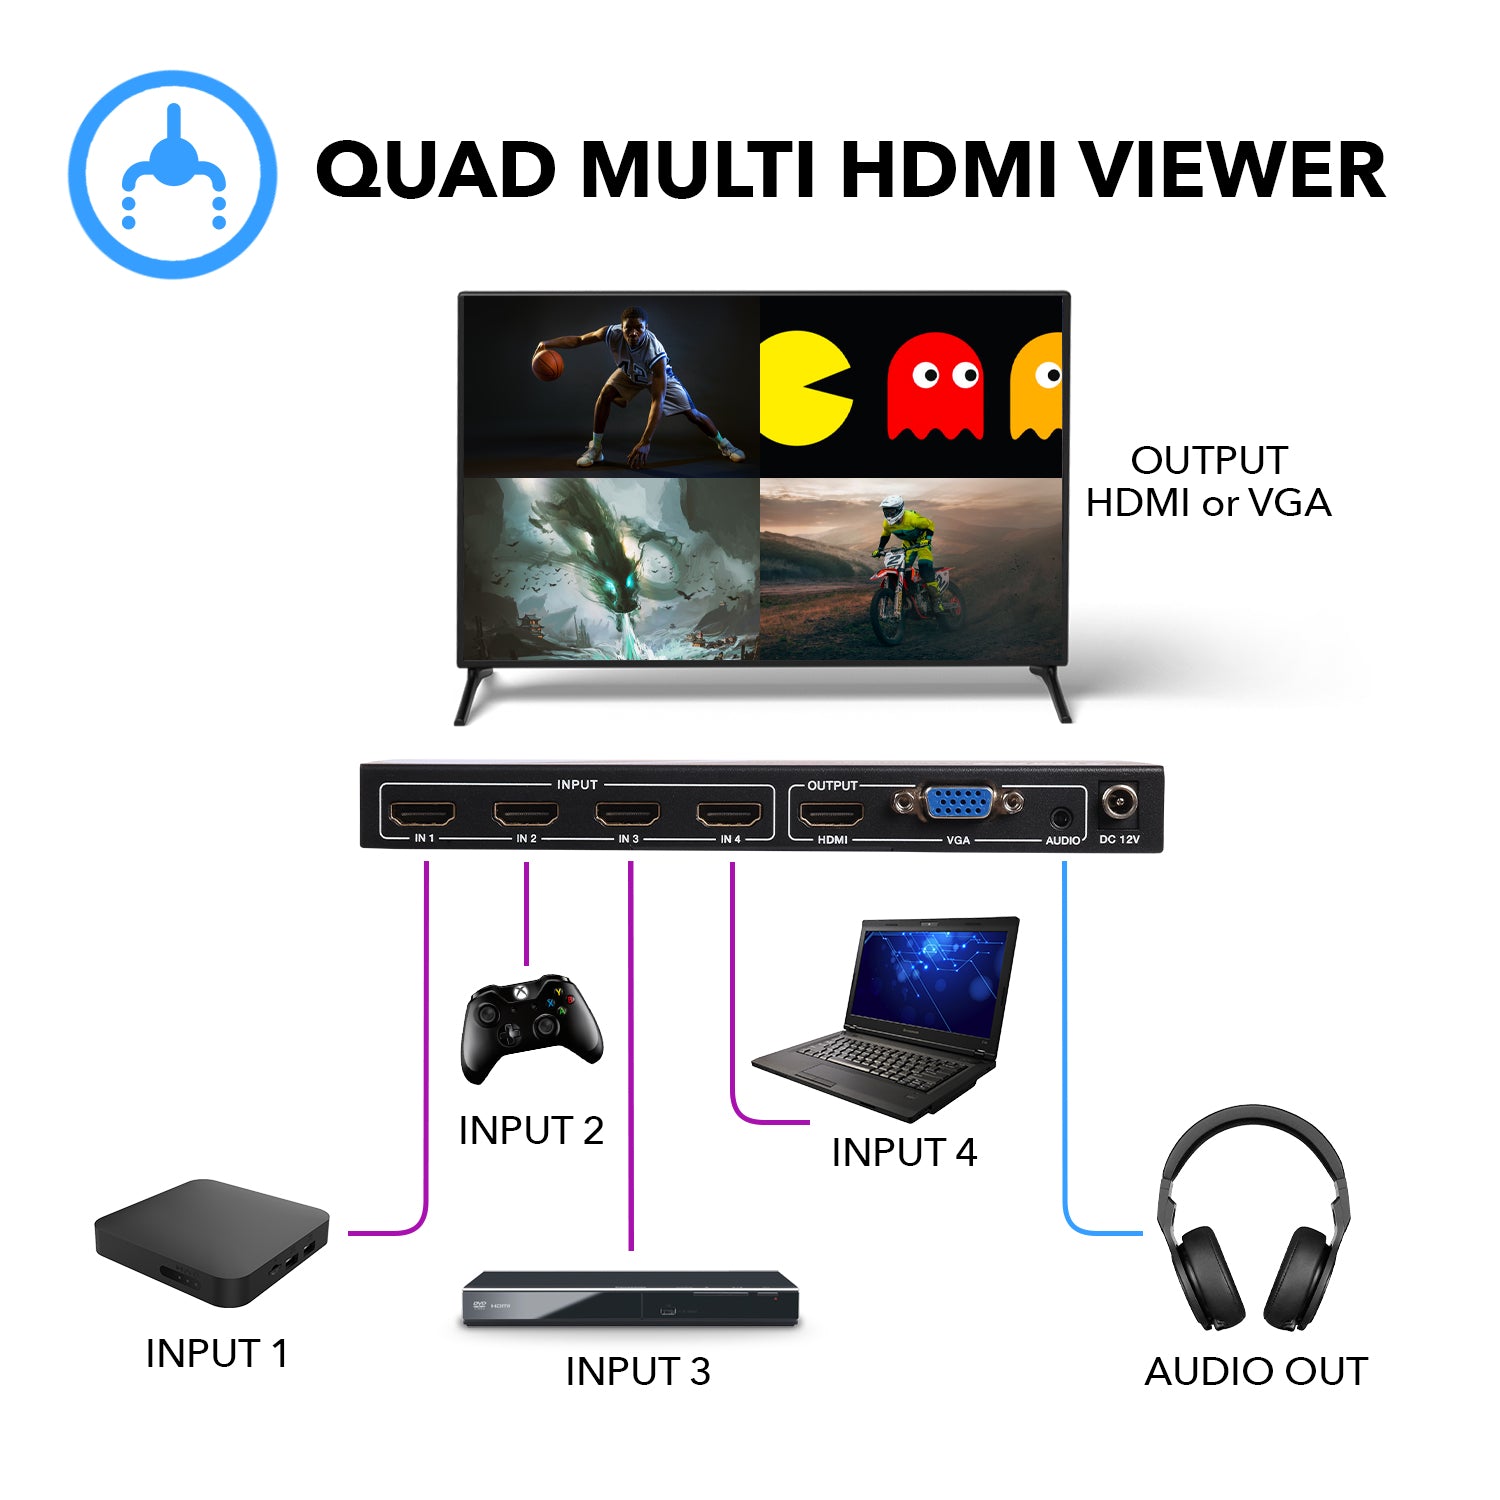 Ultra HD 4K Multi-Viewer 2x1 HDMI Seamless Video Switch(UHD-201MV)